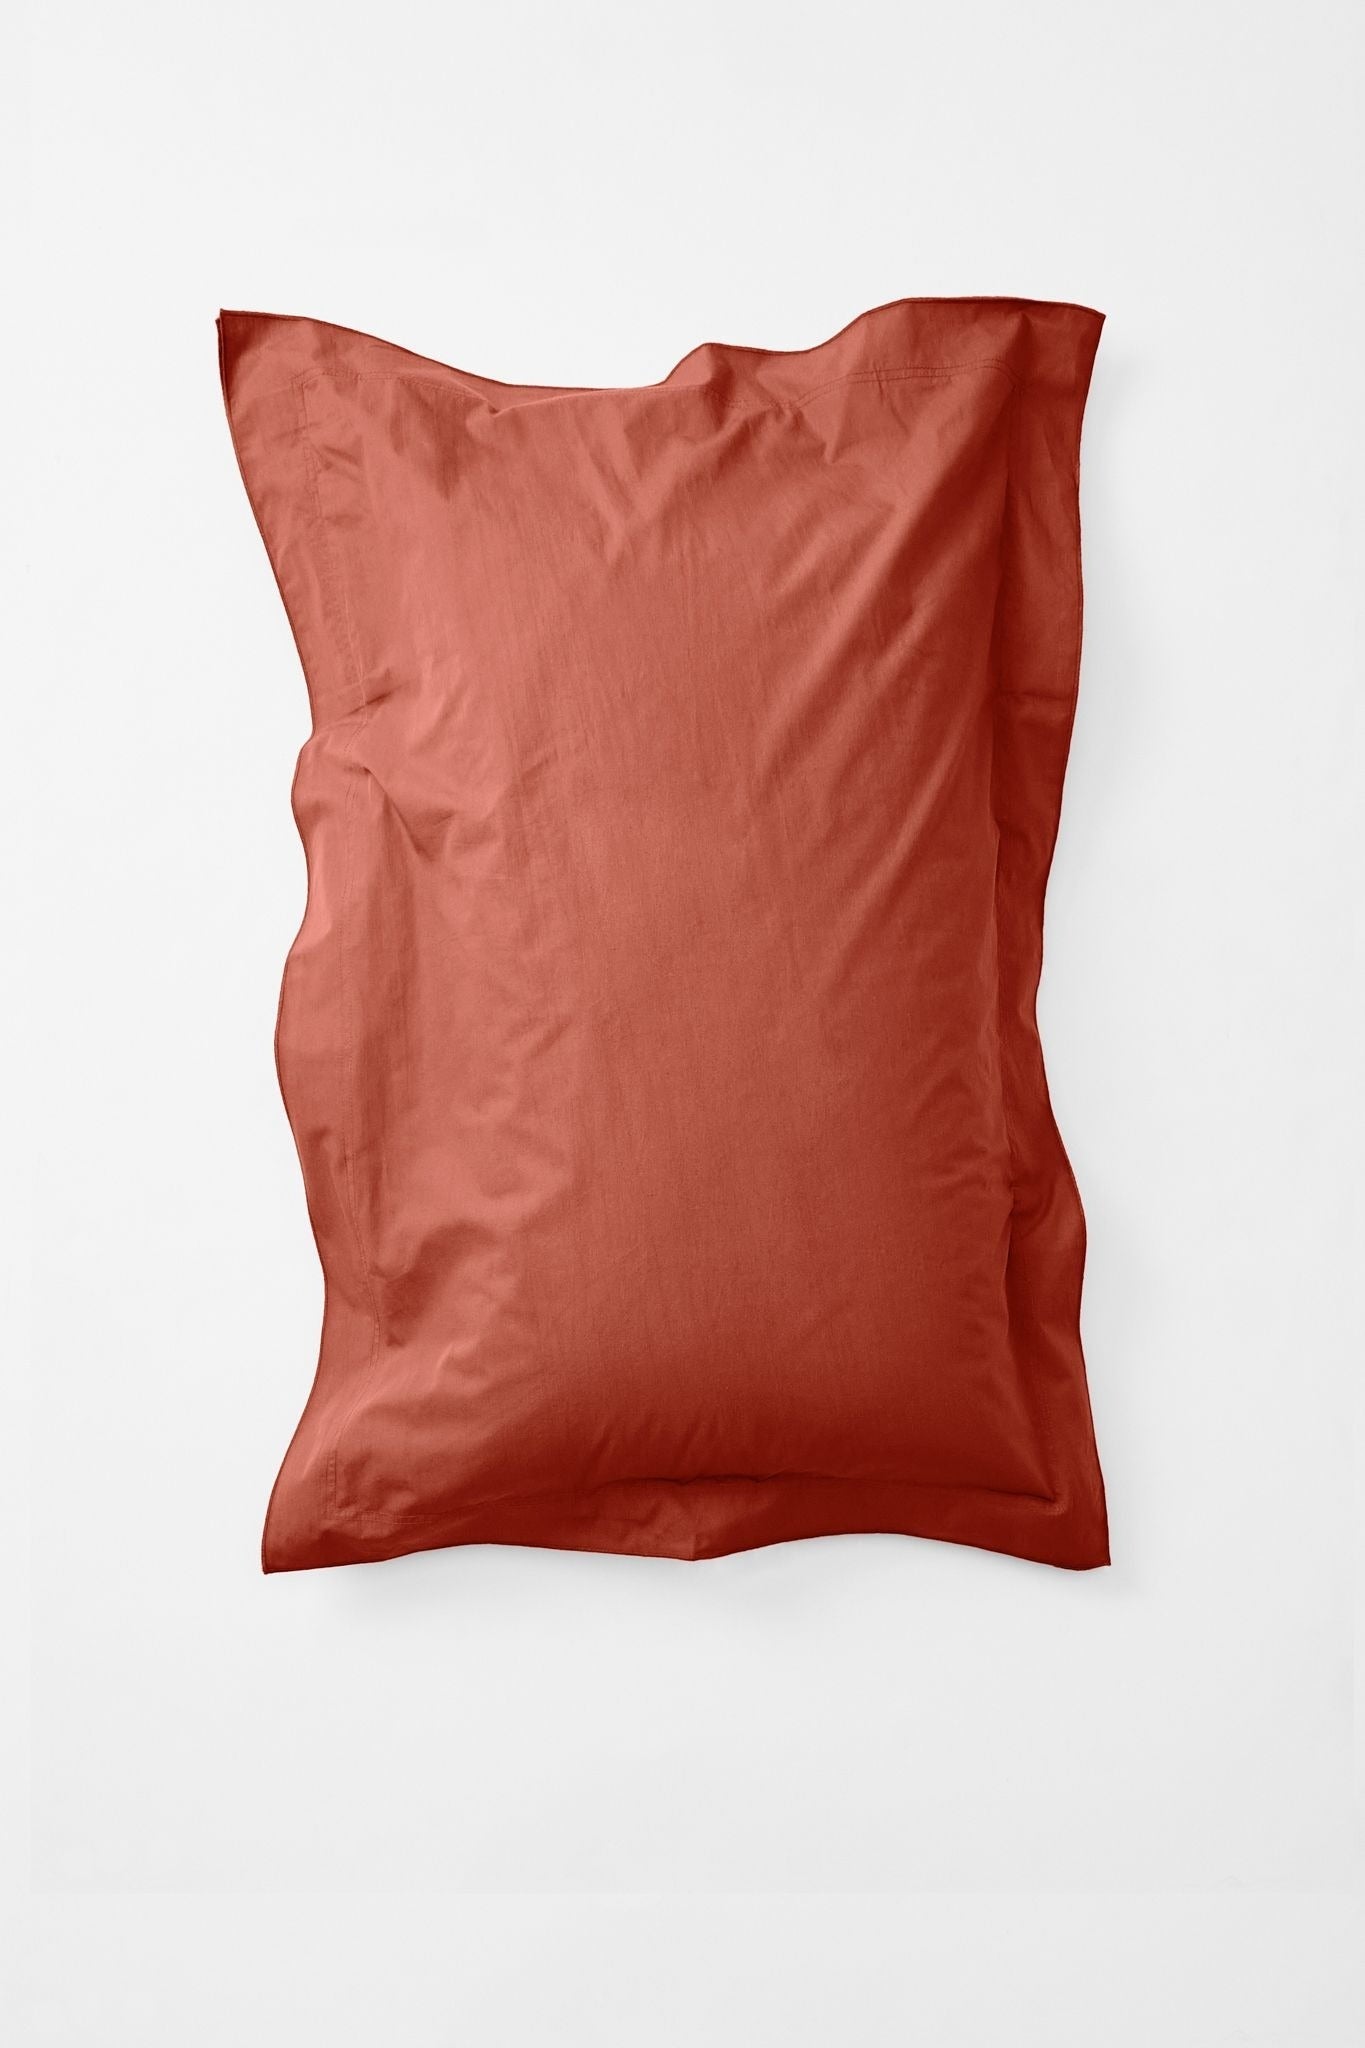 Mono Organic Cotton Percale Pillow Pair - Ochre Red Pillows in Standard Pillow